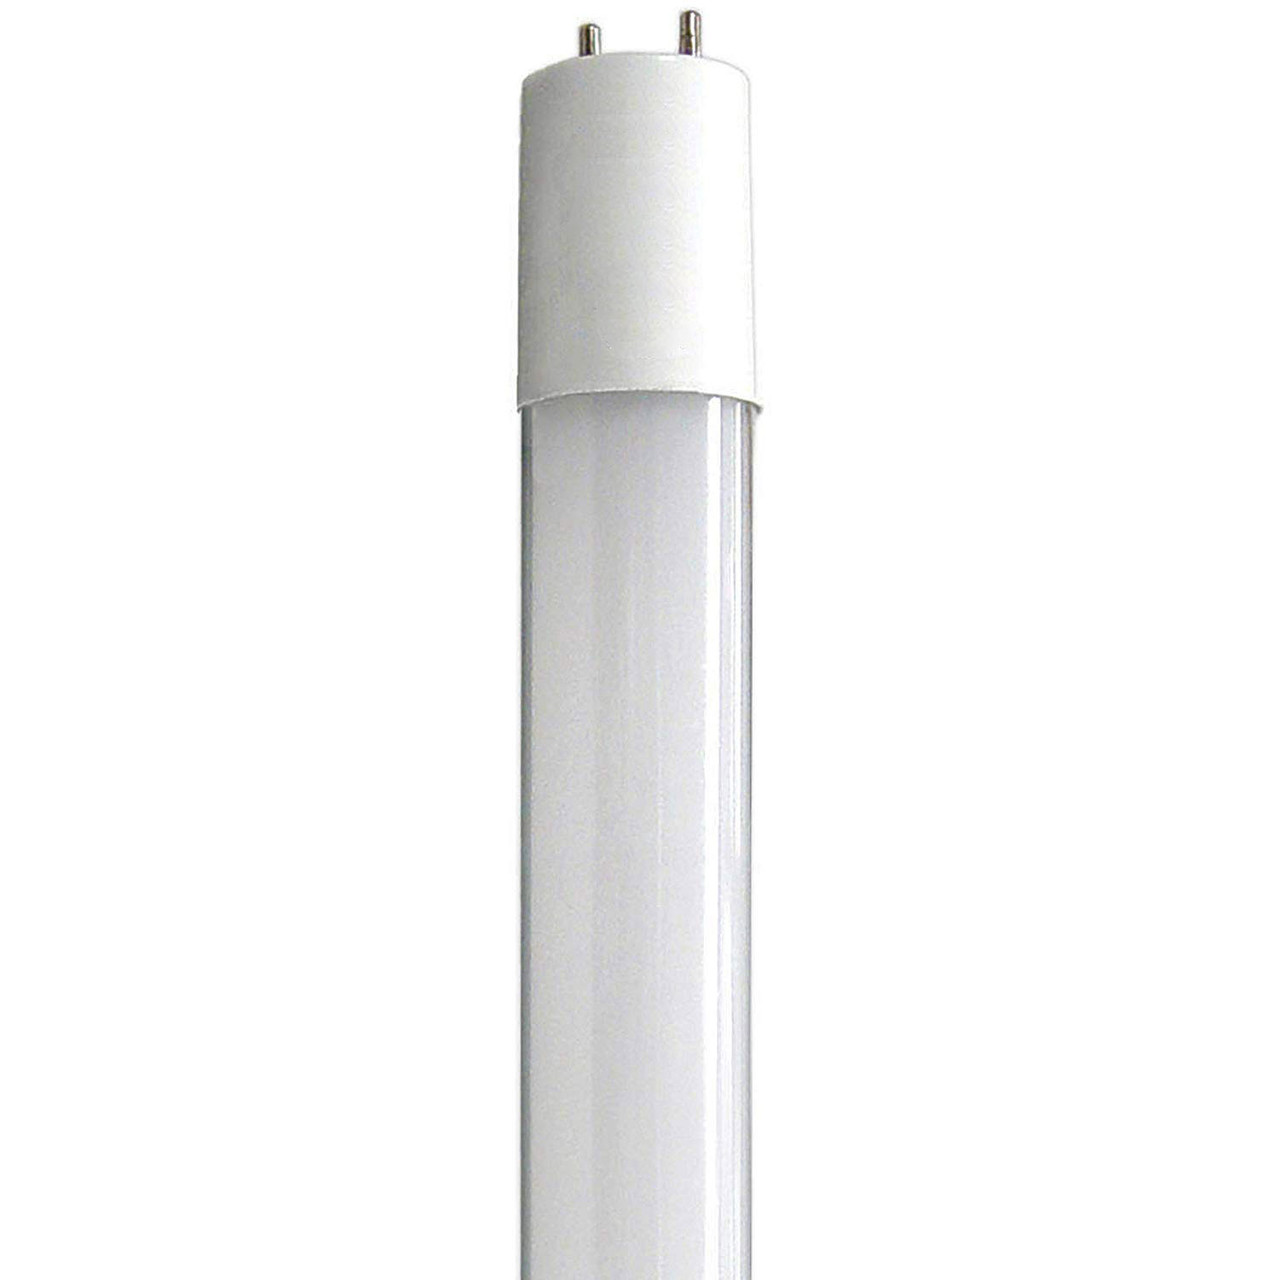 LED T8 Linear Retrofit Bulb - 3 Foot - 11 Watt - 1400 Lumens - 3500K Neutral White - Electronic T8 Ballast Compatible Only